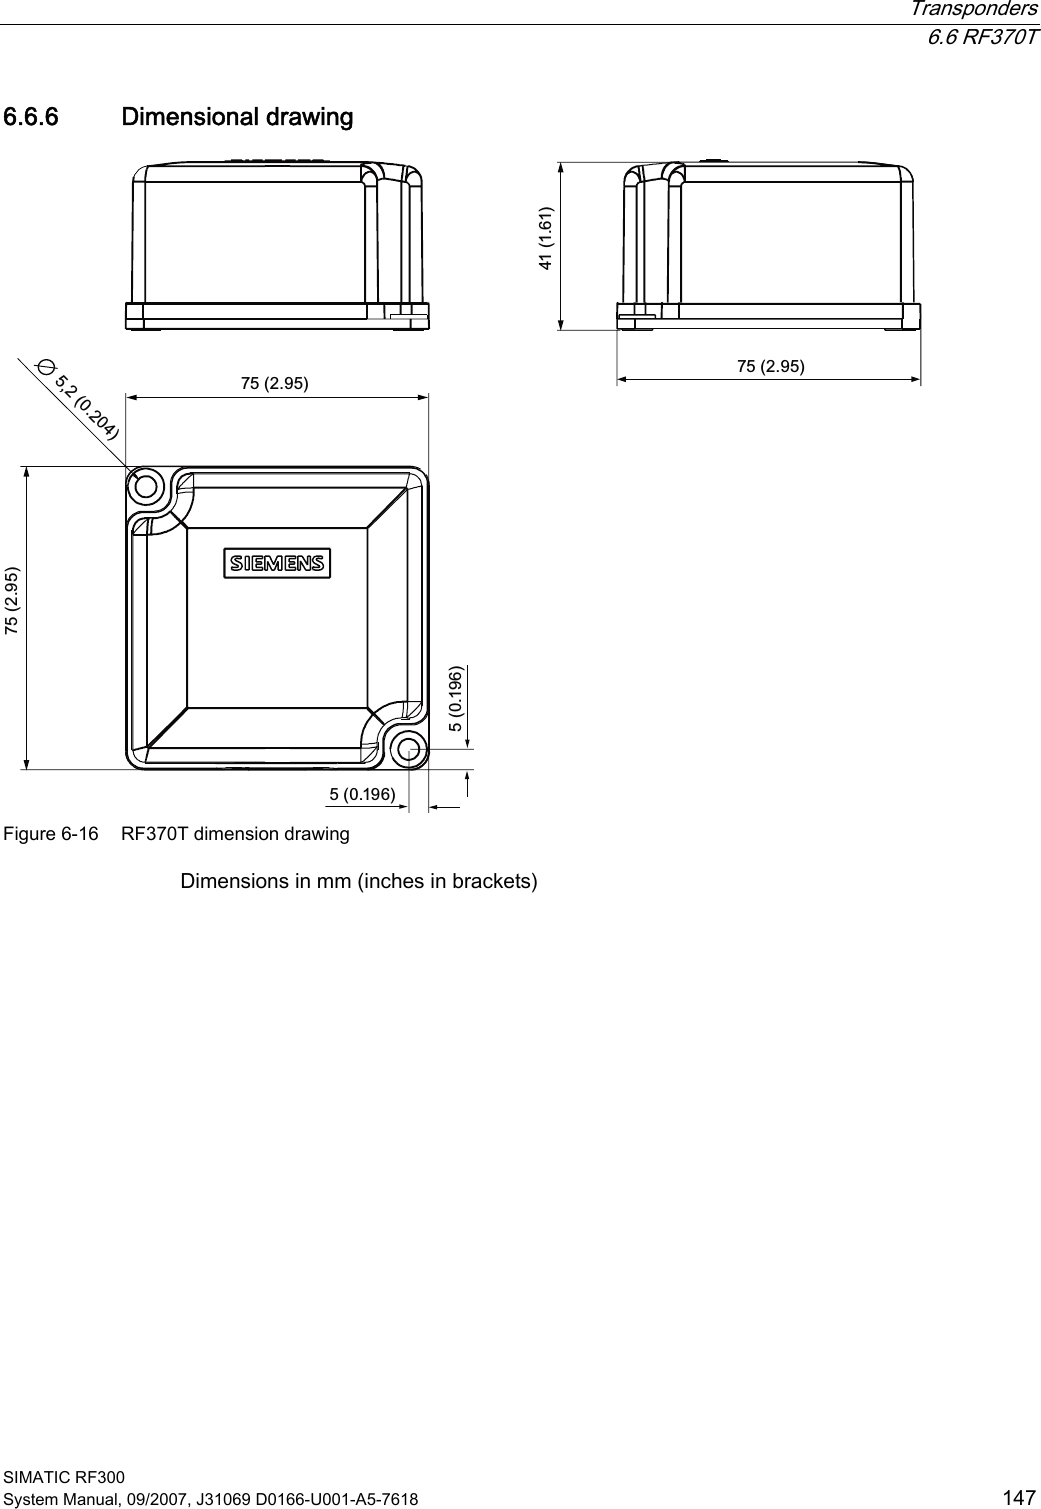  Transponders  6.6 RF370T SIMATIC RF300 System Manual, 09/2007, J31069 D0166-U001-A5-7618  147 6.6.6 Dimensional drawing  Figure 6-16  RF370T dimension drawing Dimensions in mm (inches in brackets) 